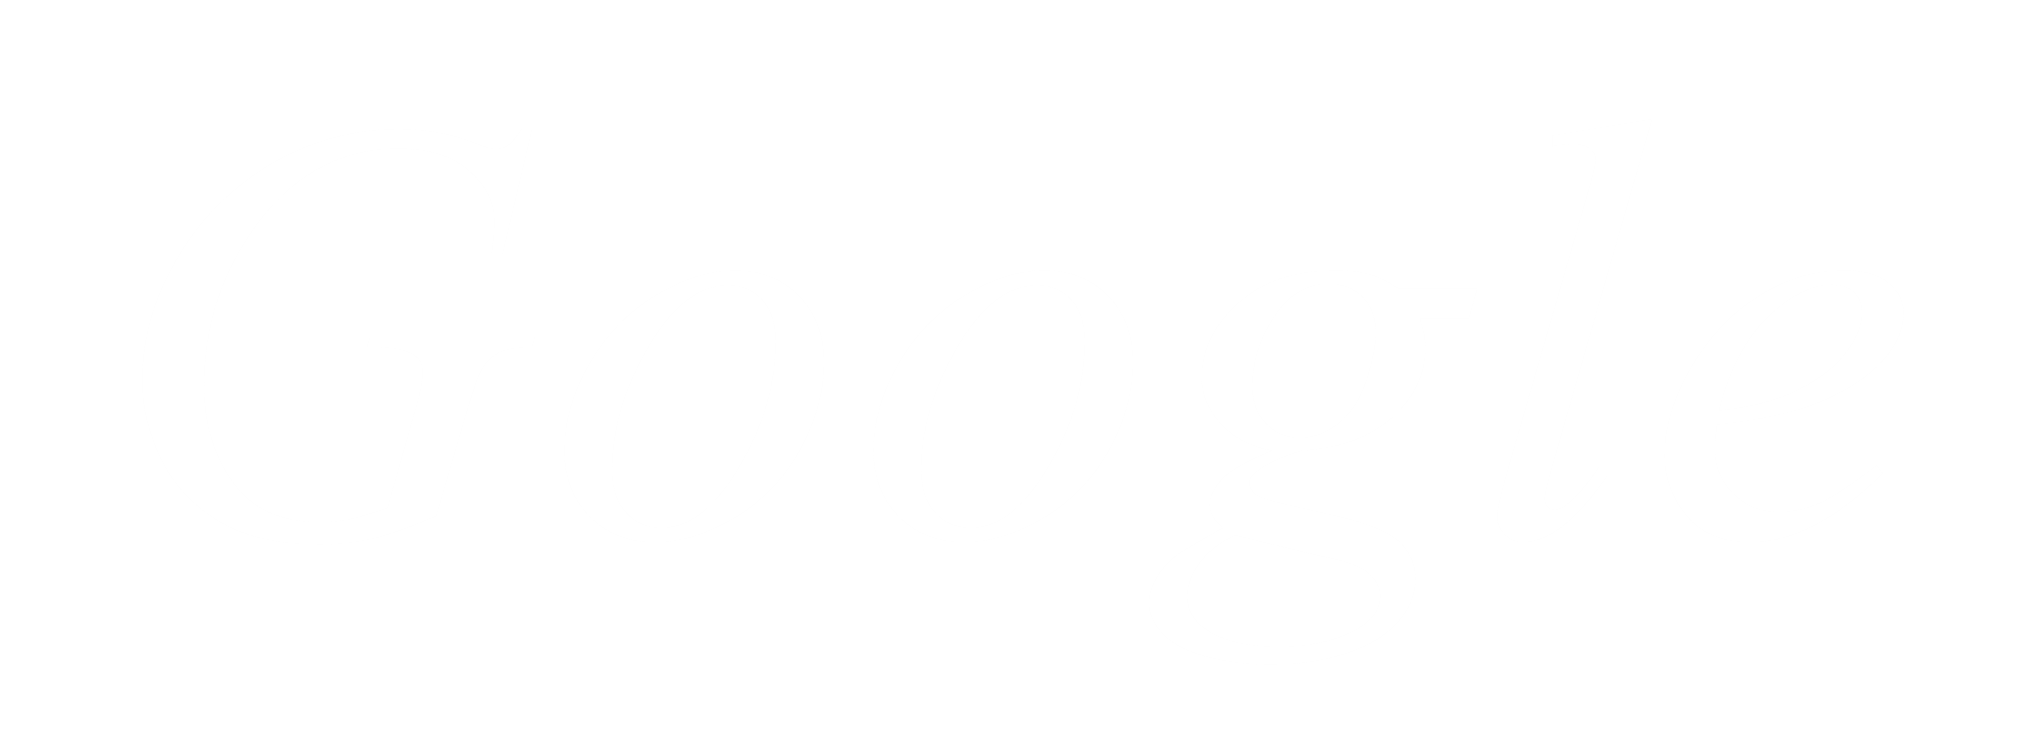 File wikimedia commons filewhite. Google logo white png